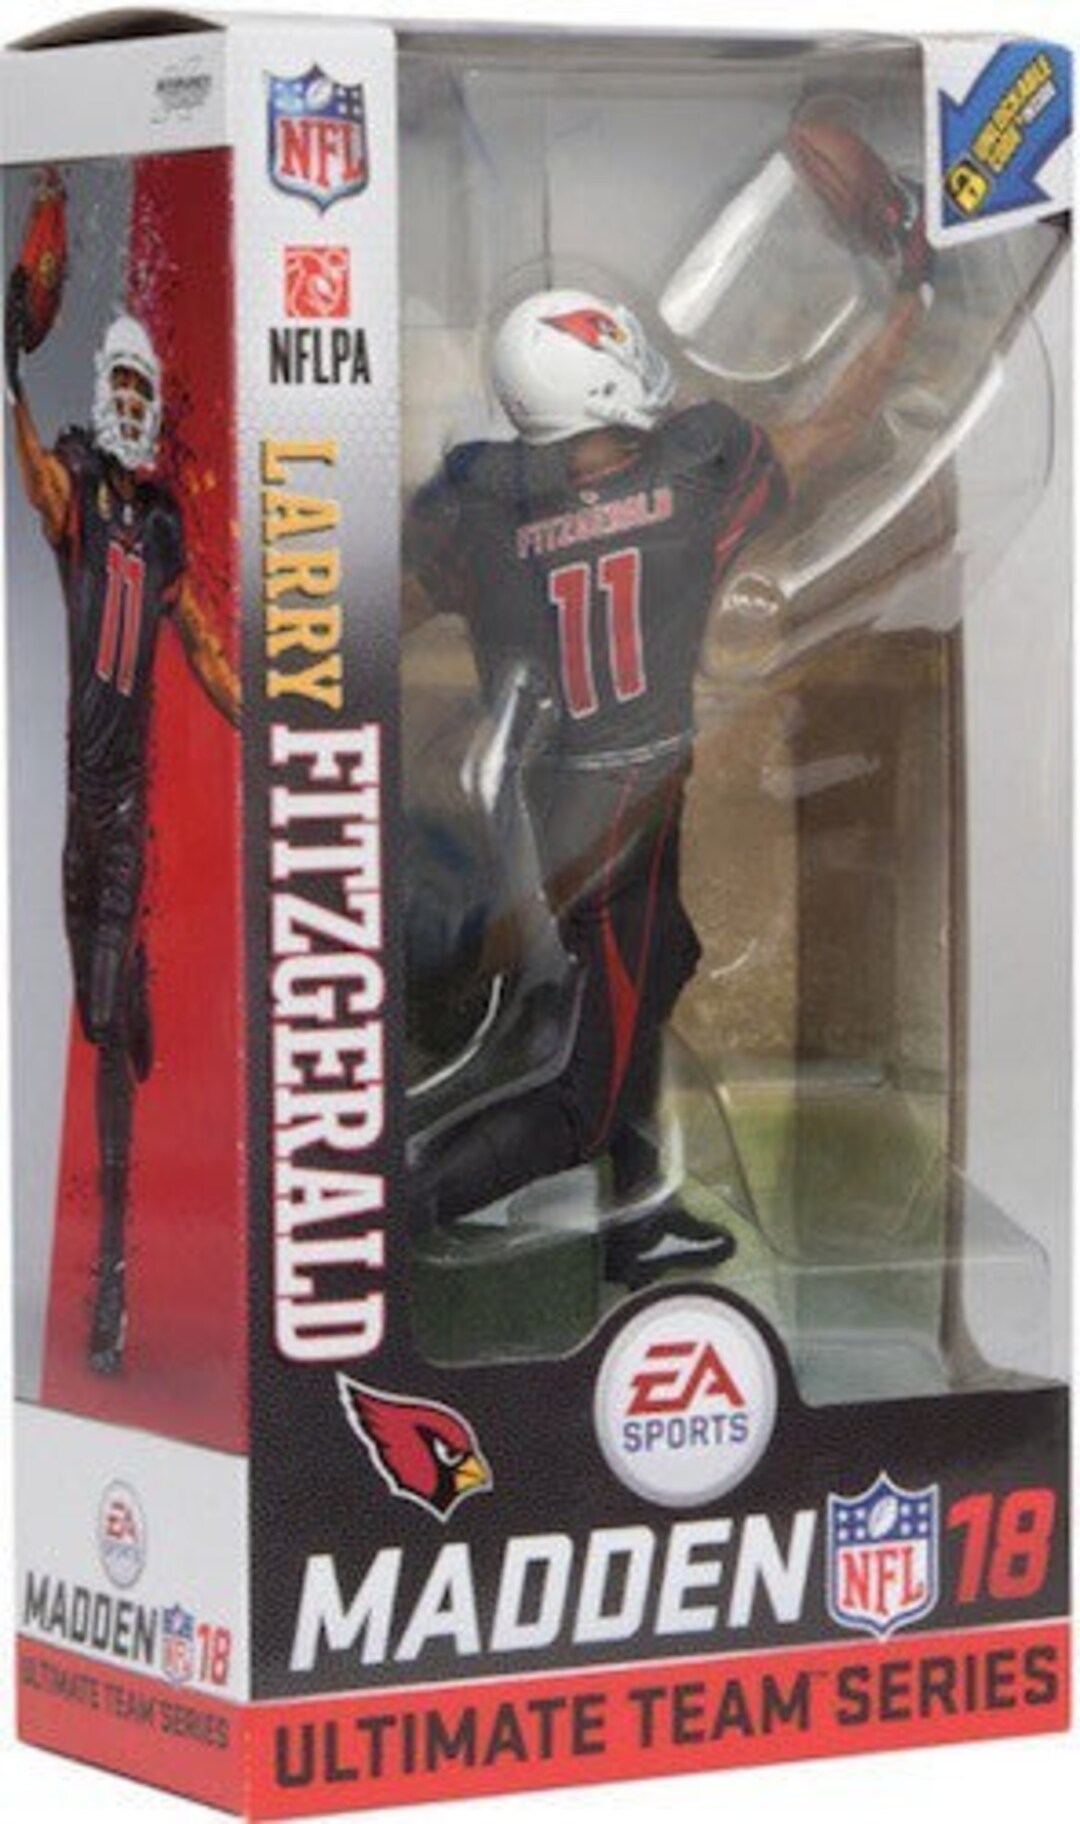 McFarlane Toys NFL Madden 18 Larry Fitzgerald Action Figure for sale online